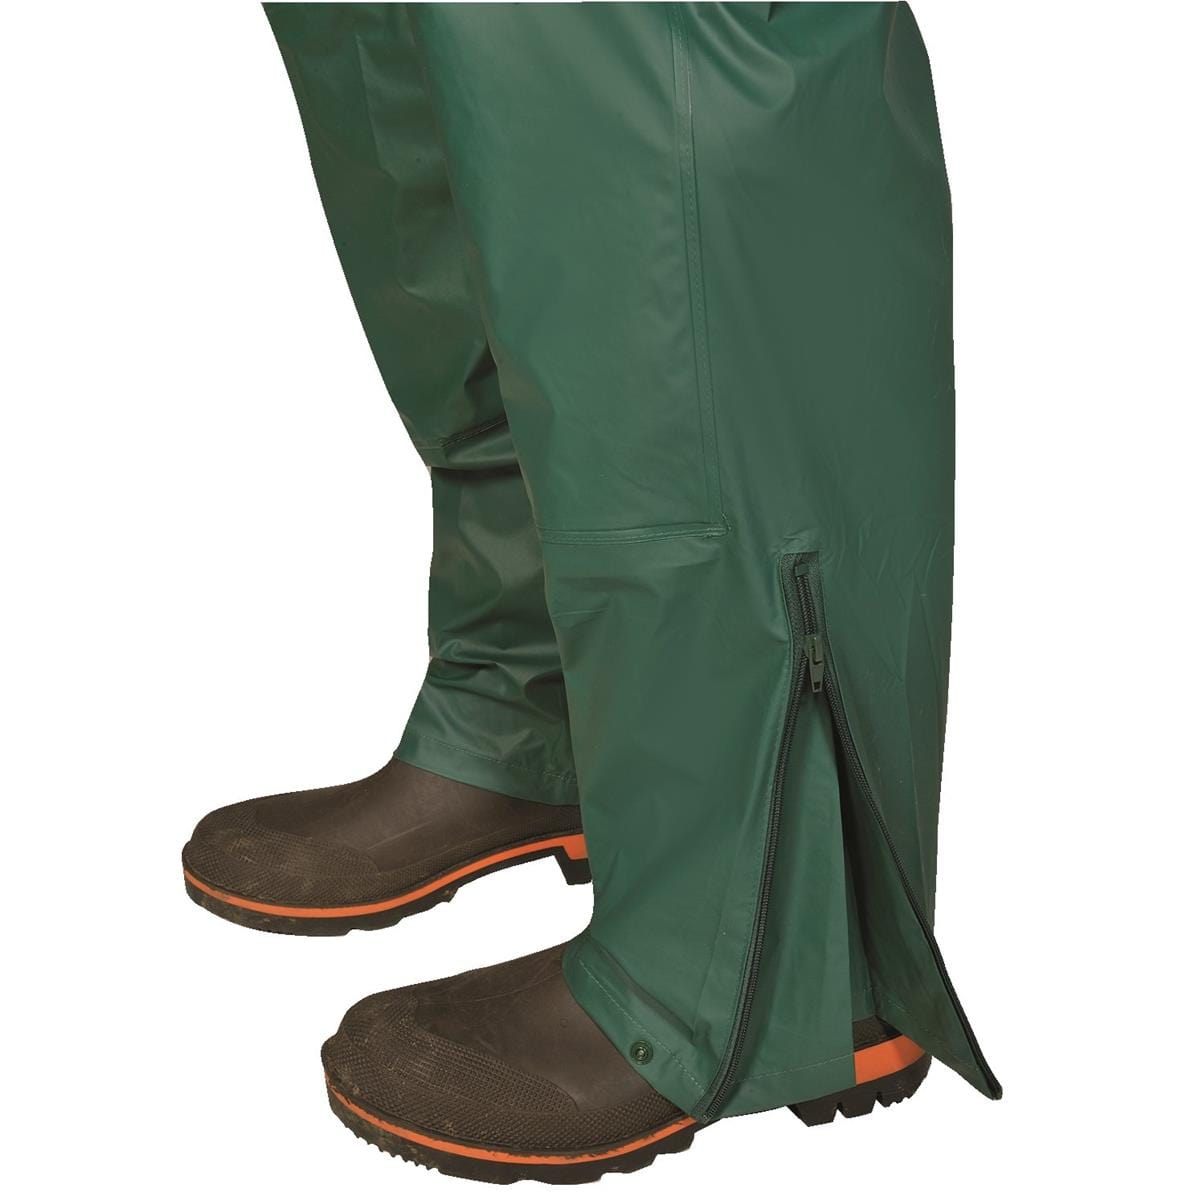 Raincoats Suit Motorcycle Rain Coat Pants Reflective Strip Poncho Waterproof  Rain Jacket Cycling Hiking Protective Rain Gear